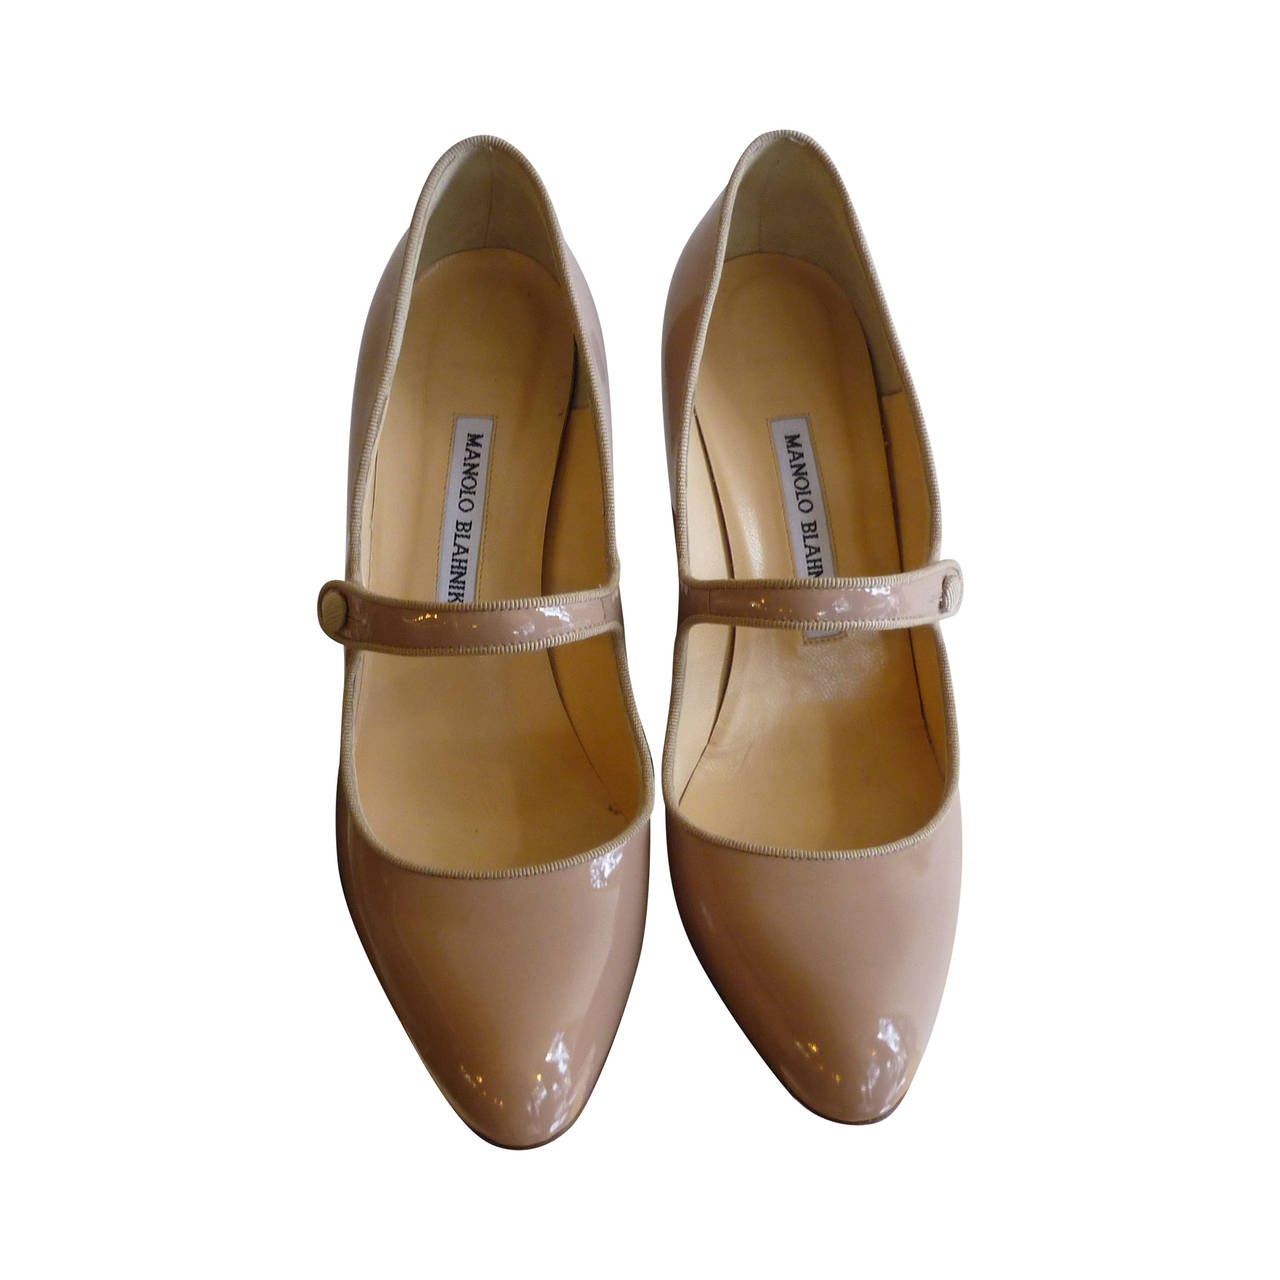 Beautiful Manolo Blahnik Beige Patent Campari Mary Jane Shoes 38.5